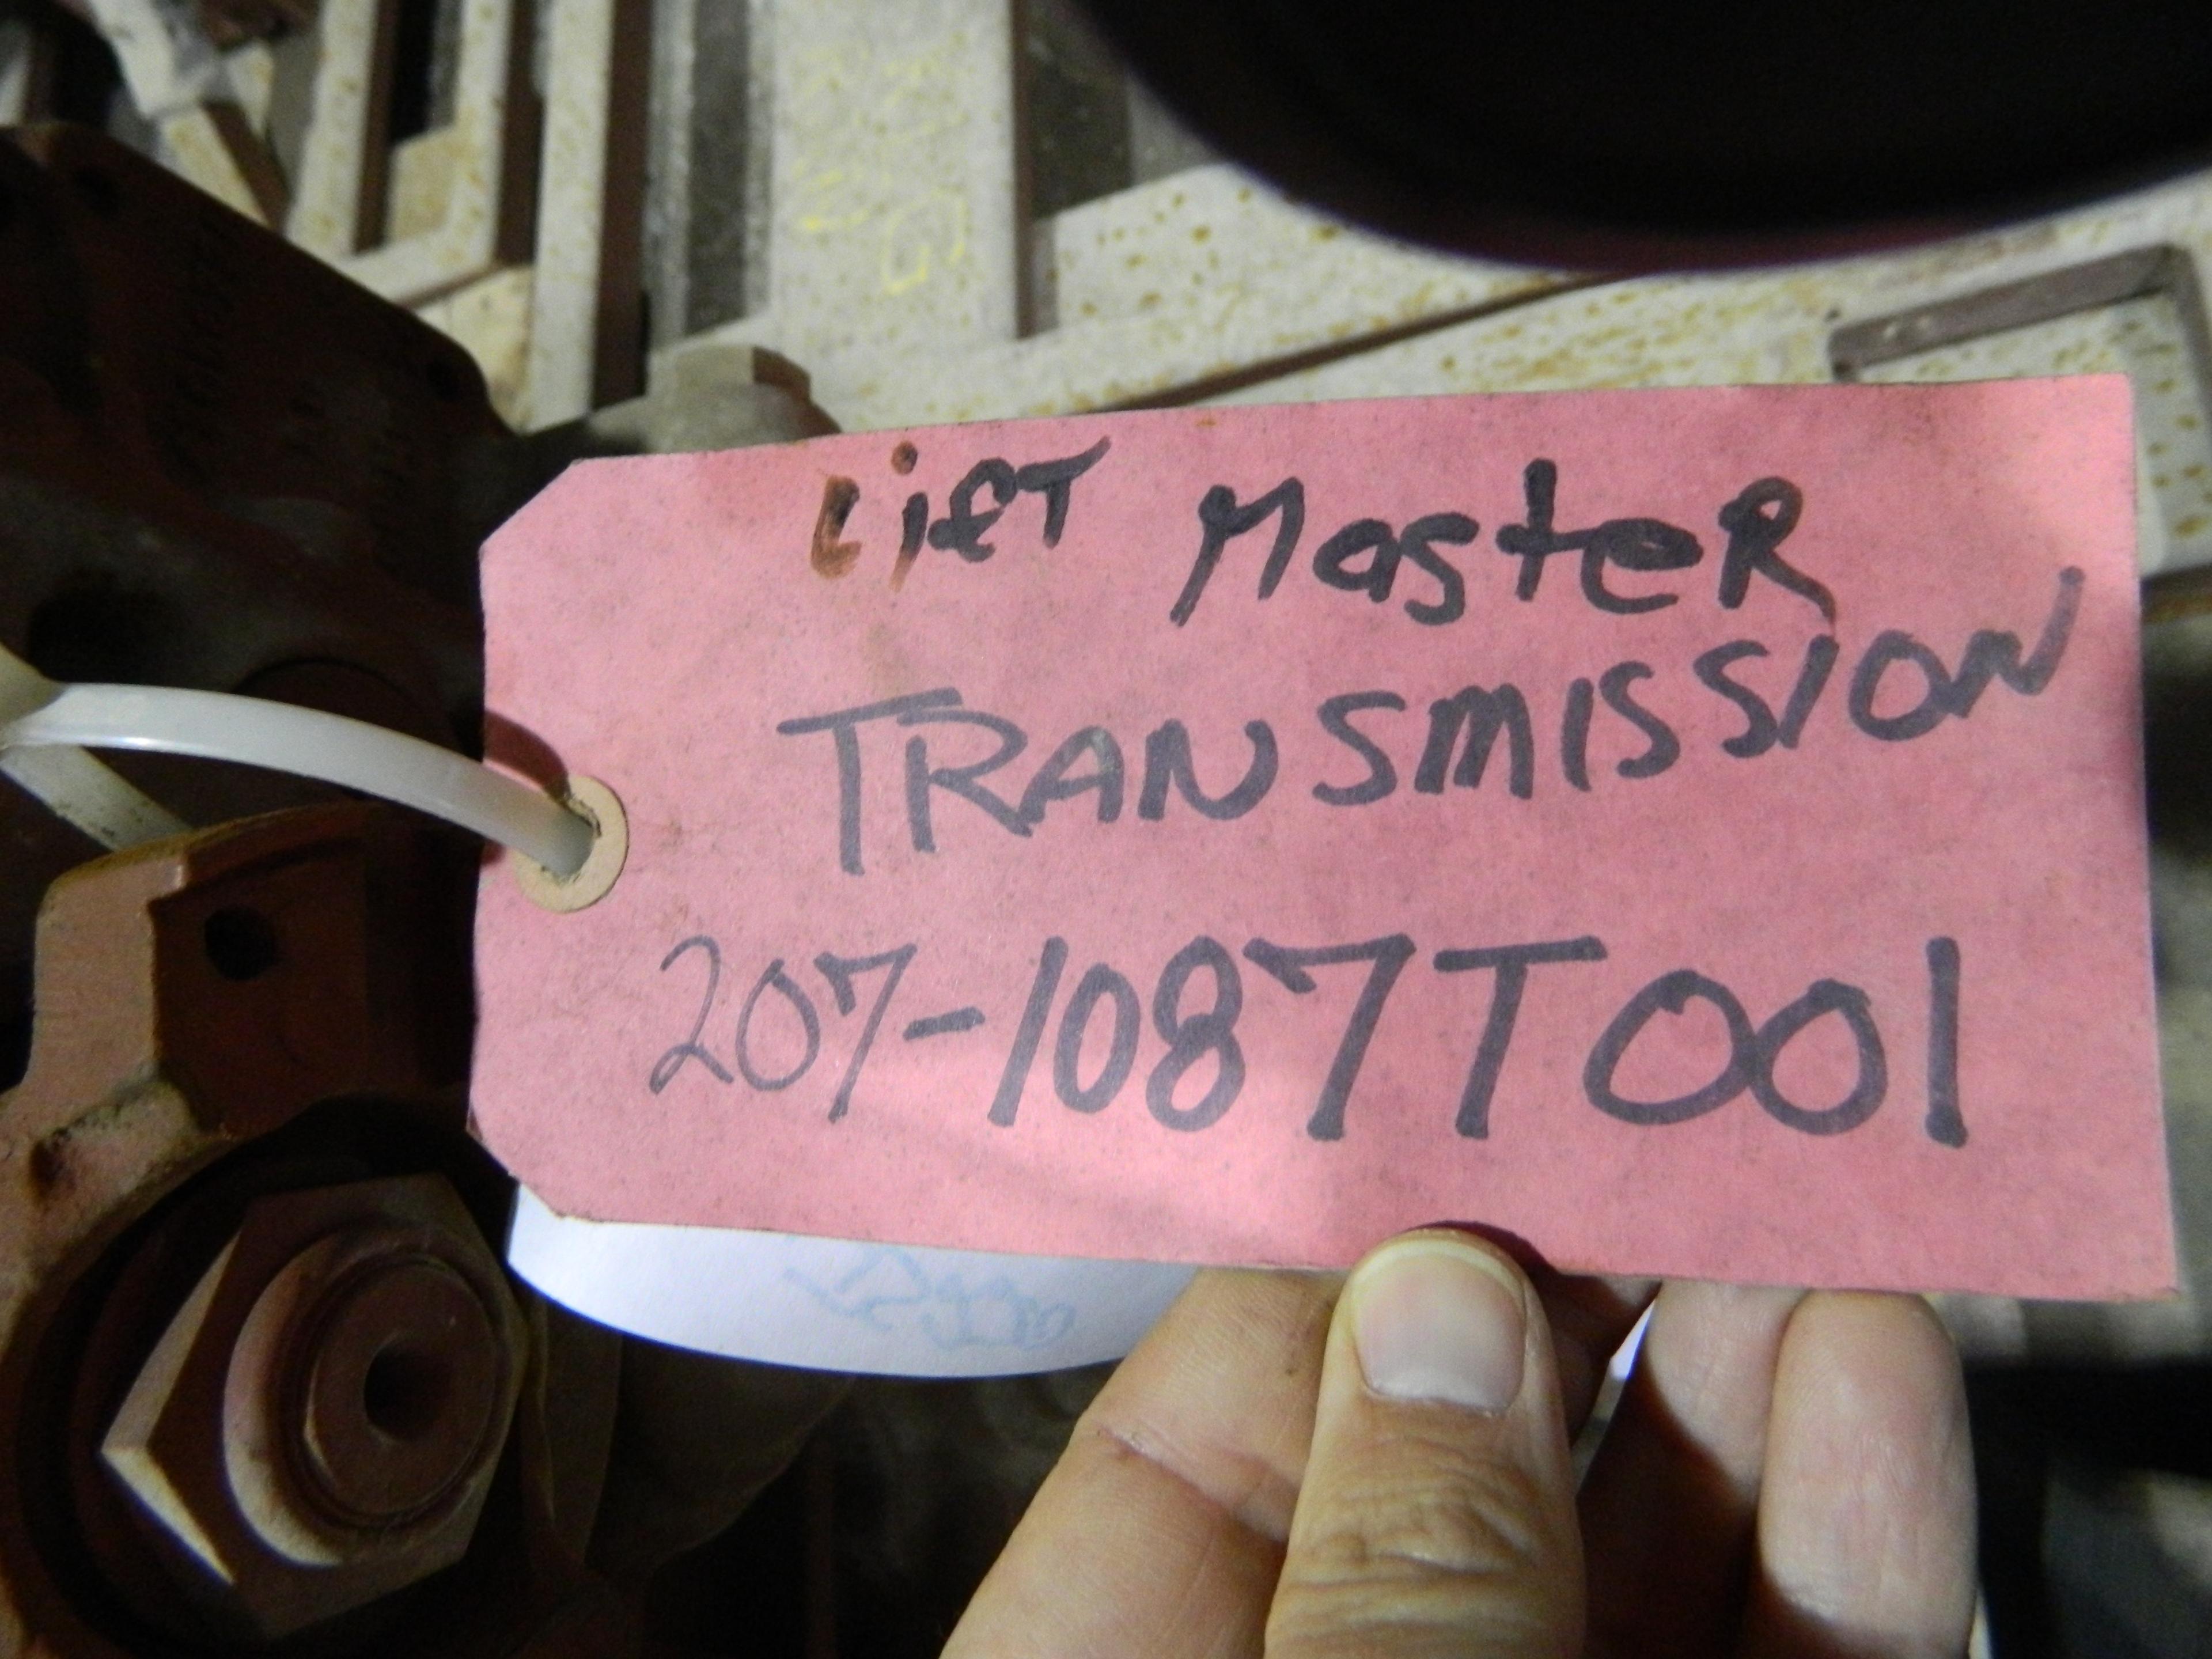 JT220 Lift Master Transmission